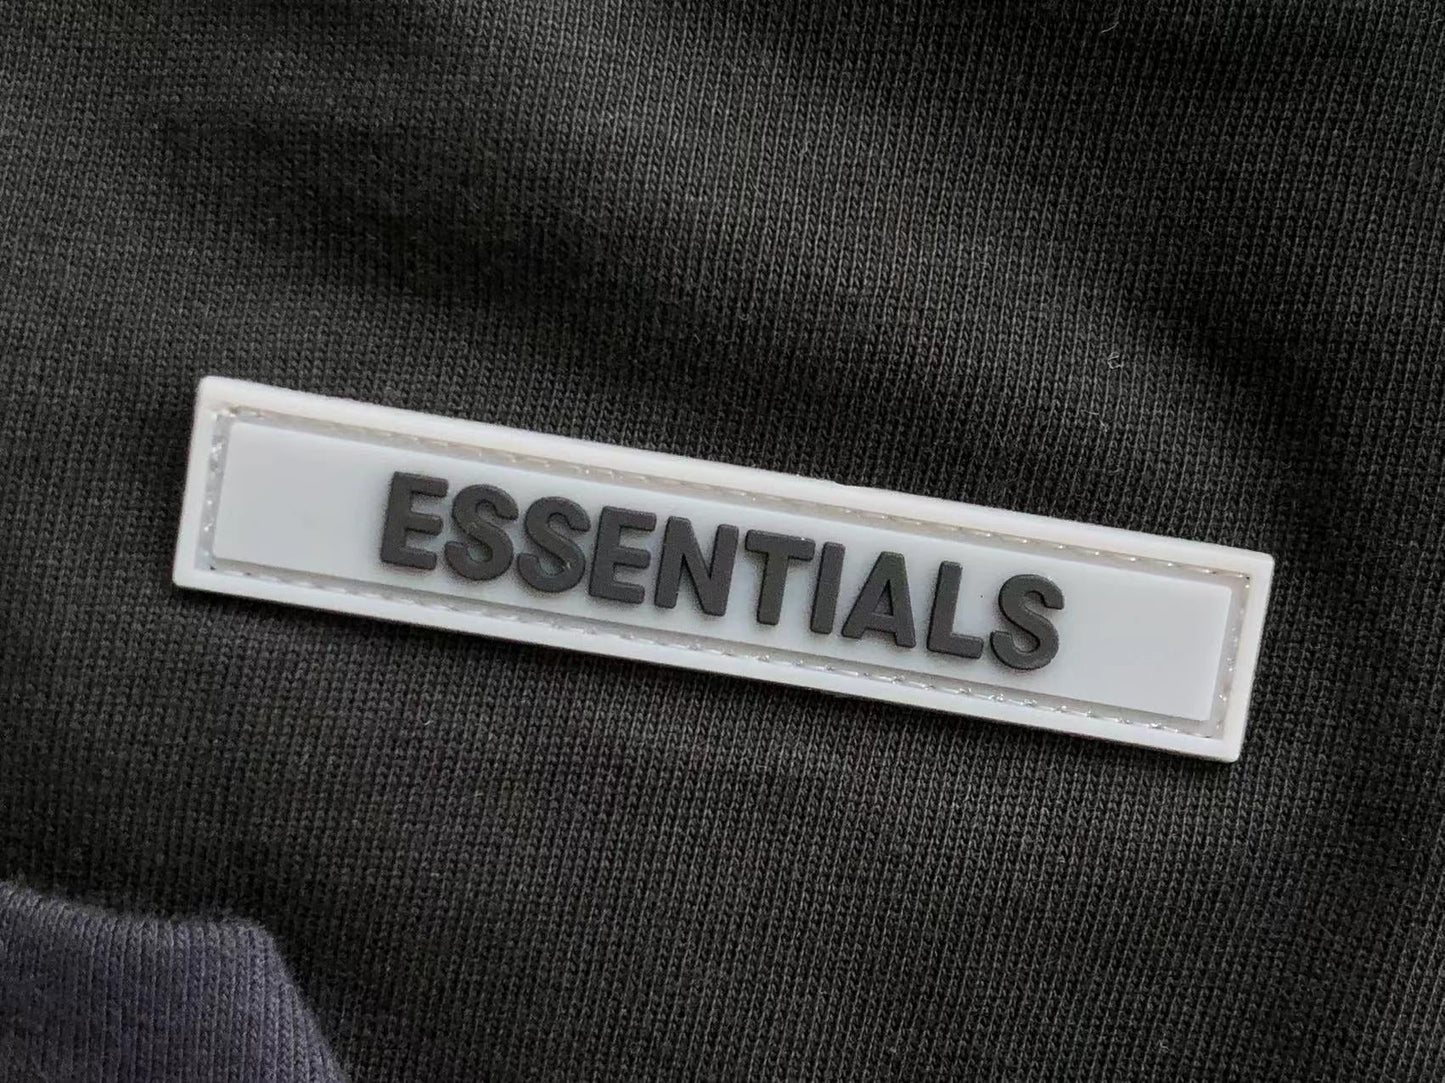 FOG Essentials Tshirt Hk321304